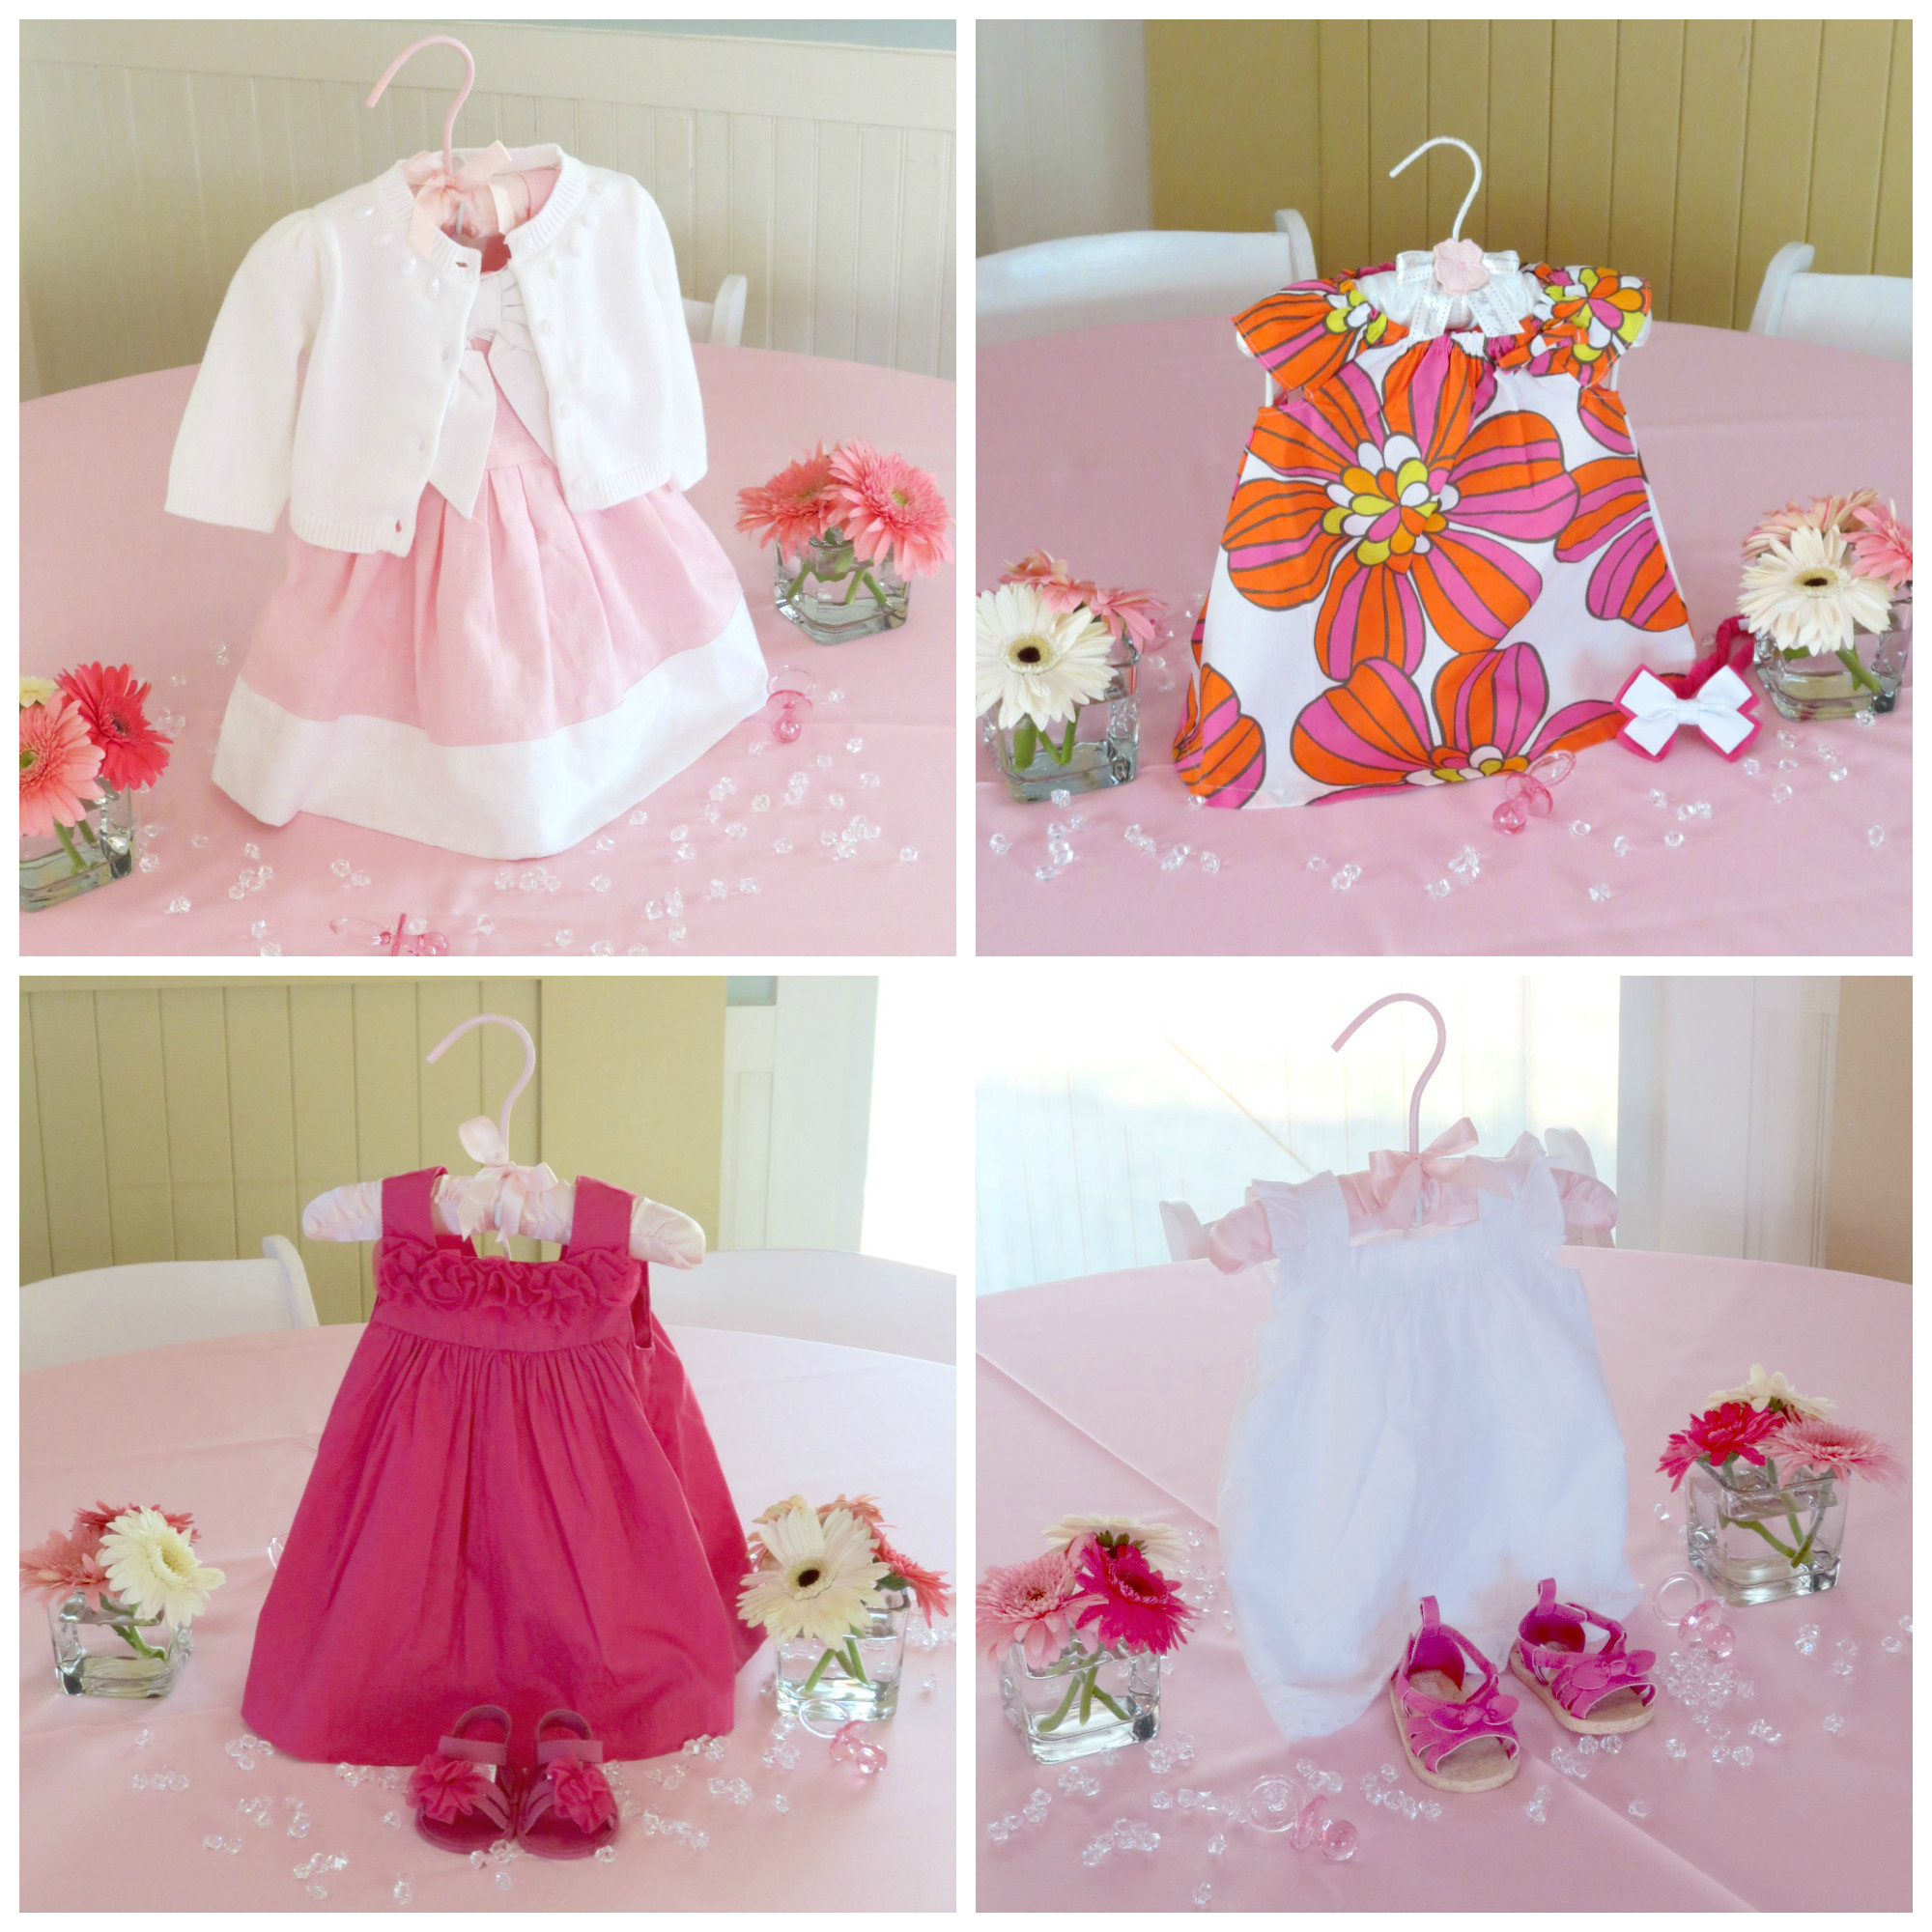 DIY Baby Shower Centerpieces For Girls
 DIY Baby Dress Centerpiece